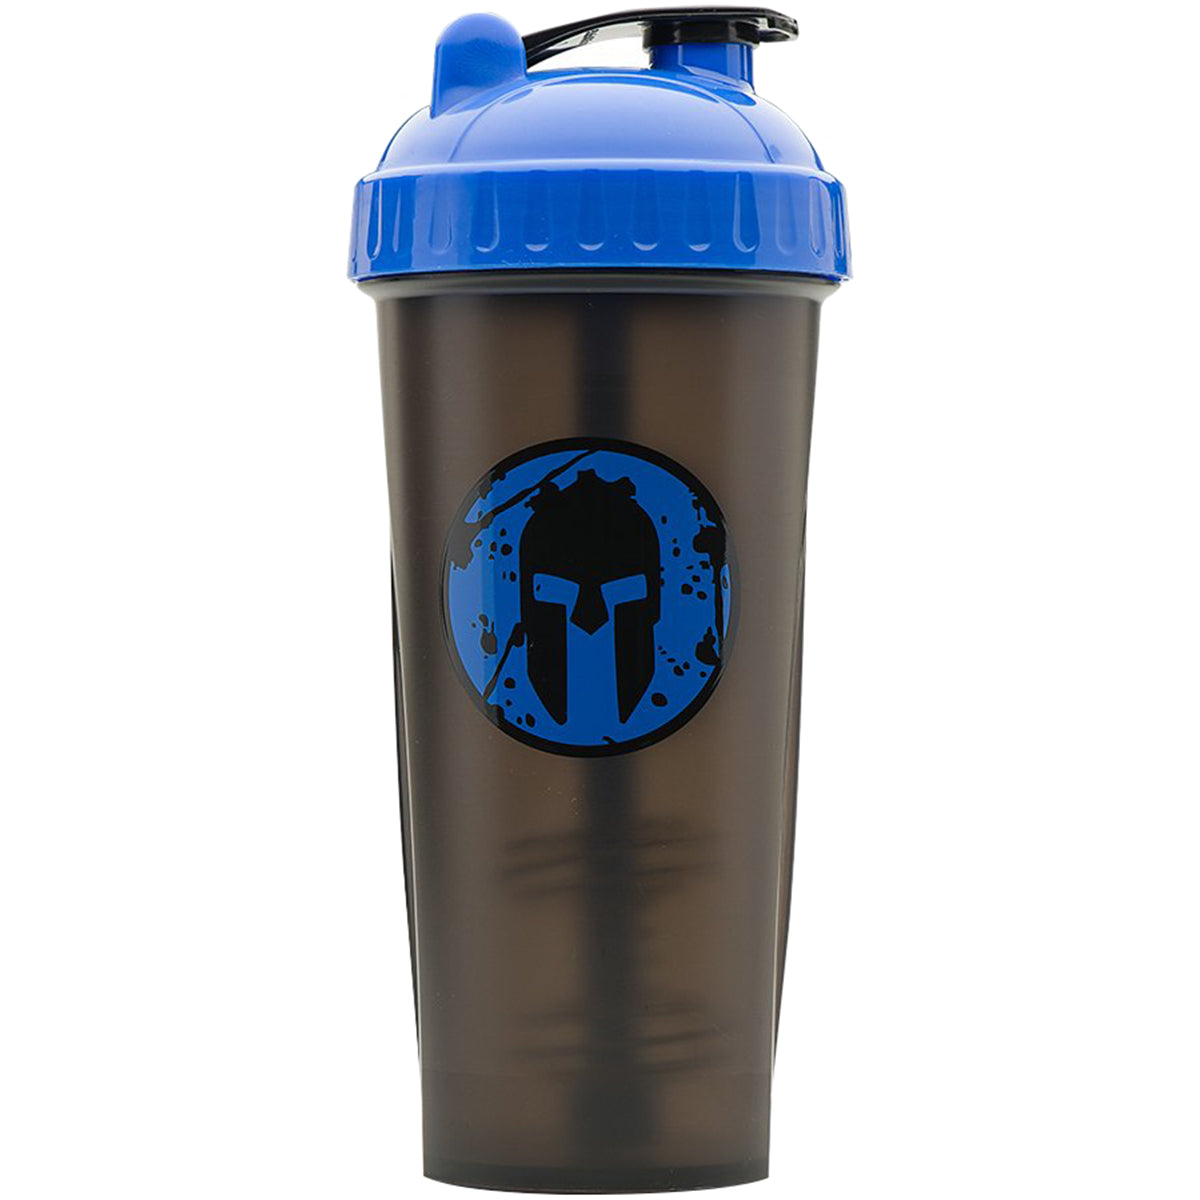 Performa PerfectShaker 28 oz Spartan Race Shaker Cup, Blue Super, perfect bottle PerfectShaker